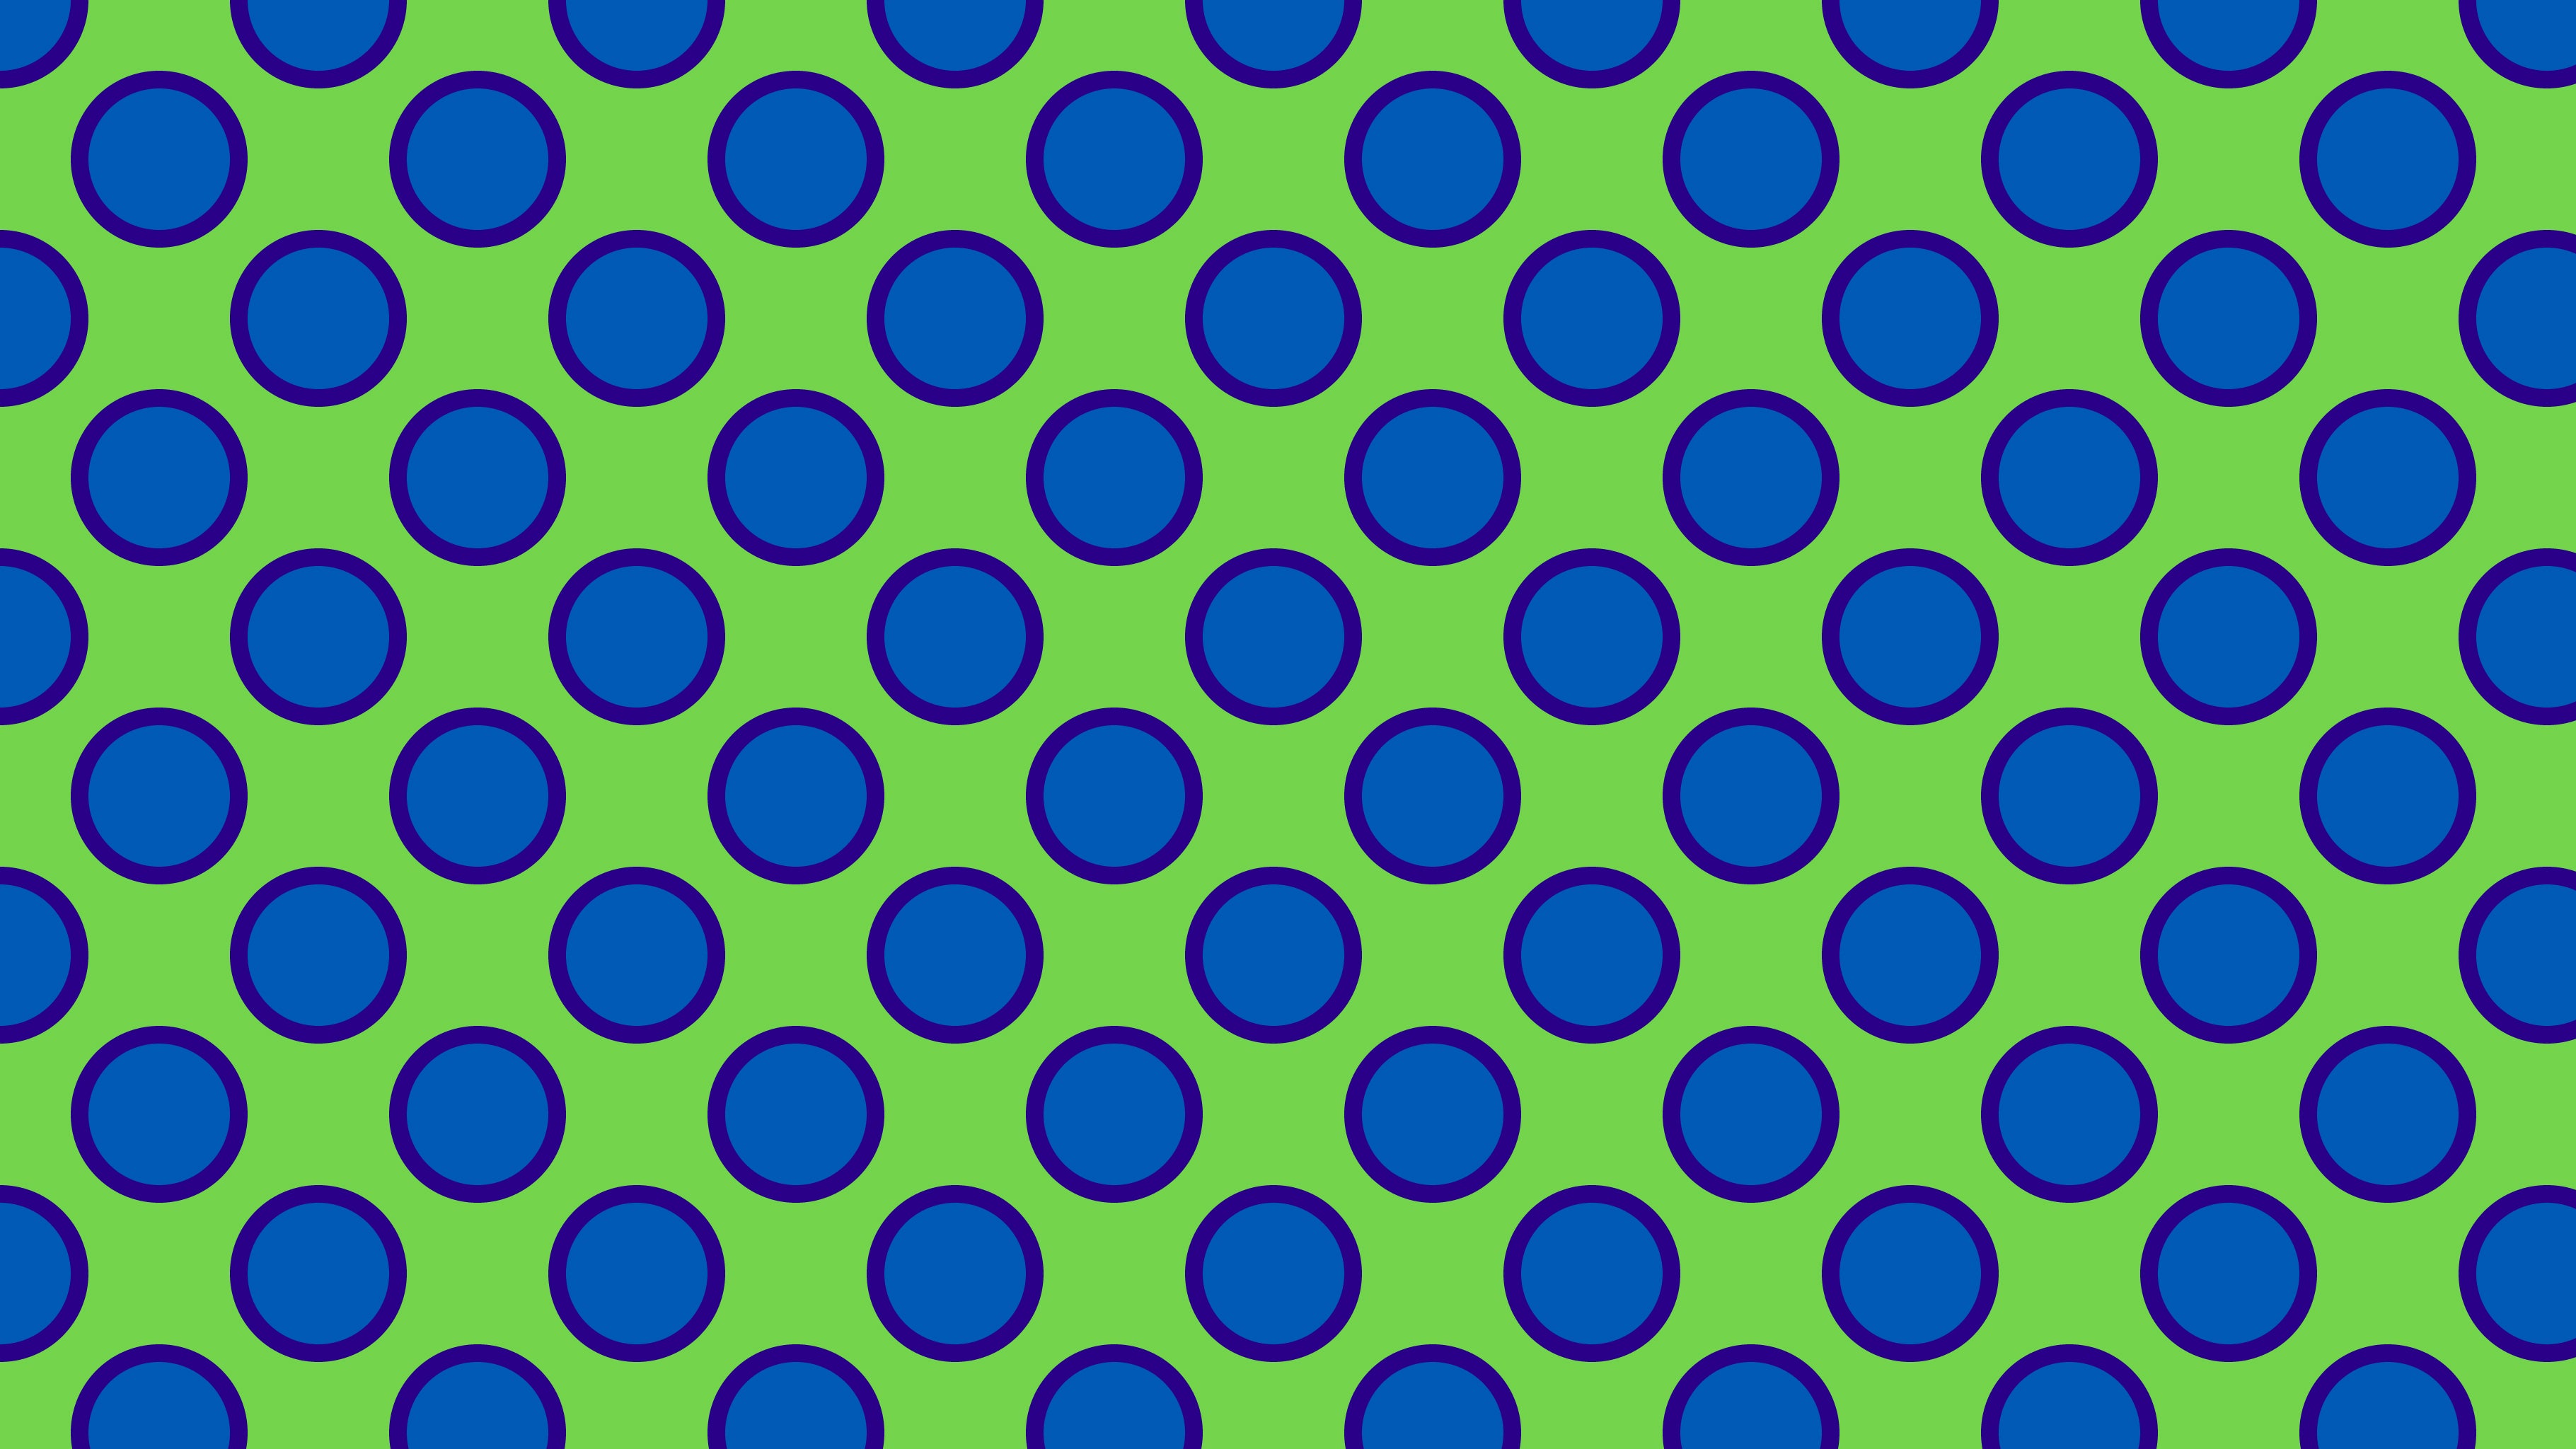 Blue Dots on Green by Studio Ten Design